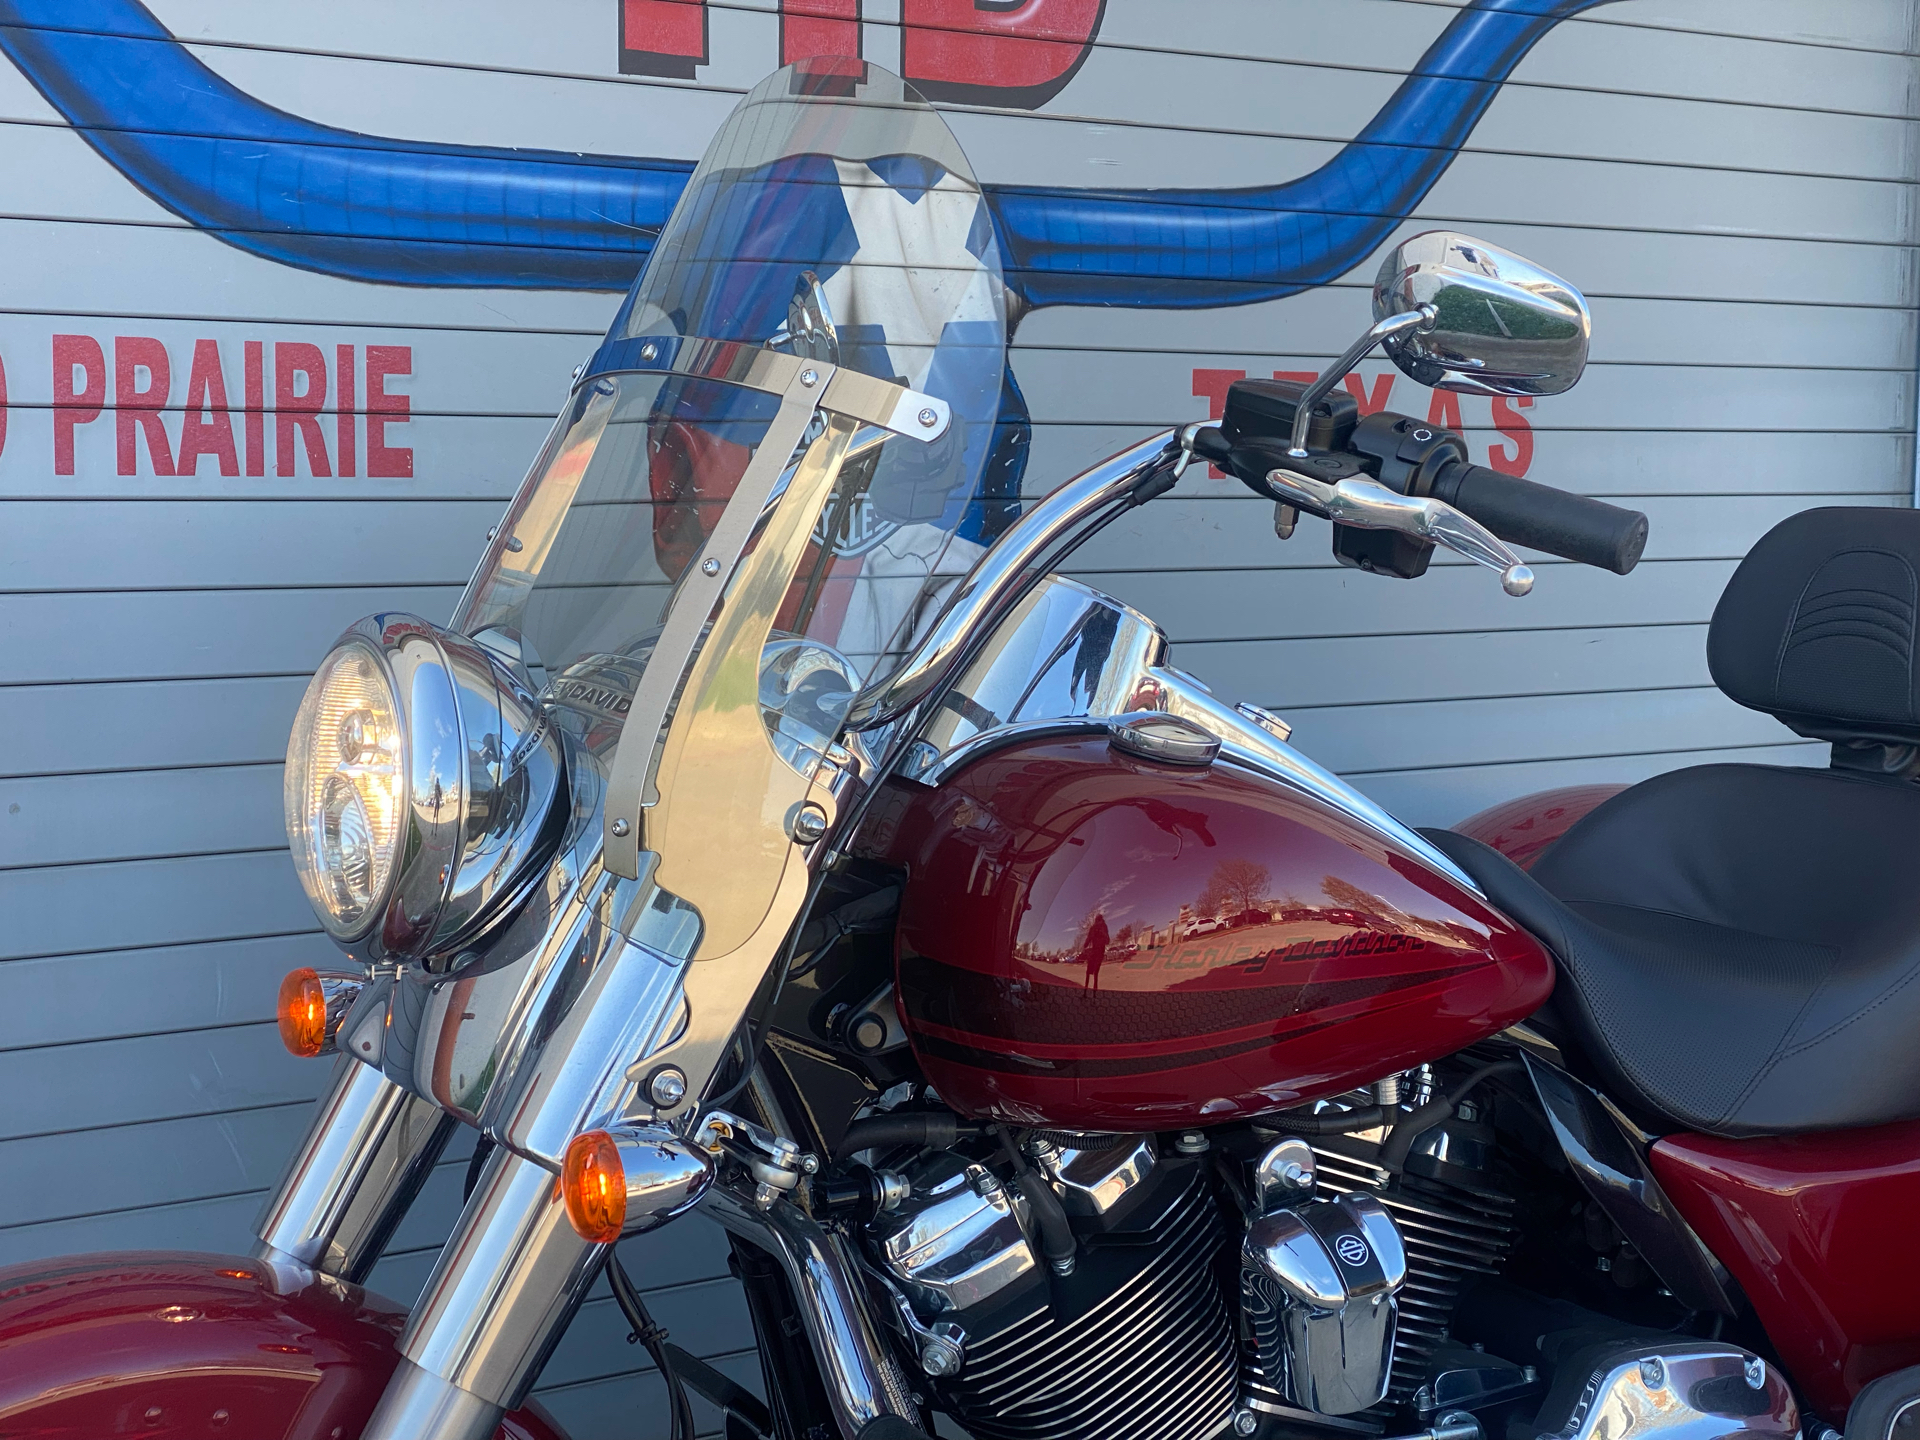 2020 Harley-Davidson Freewheeler® in Grand Prairie, Texas - Photo 15